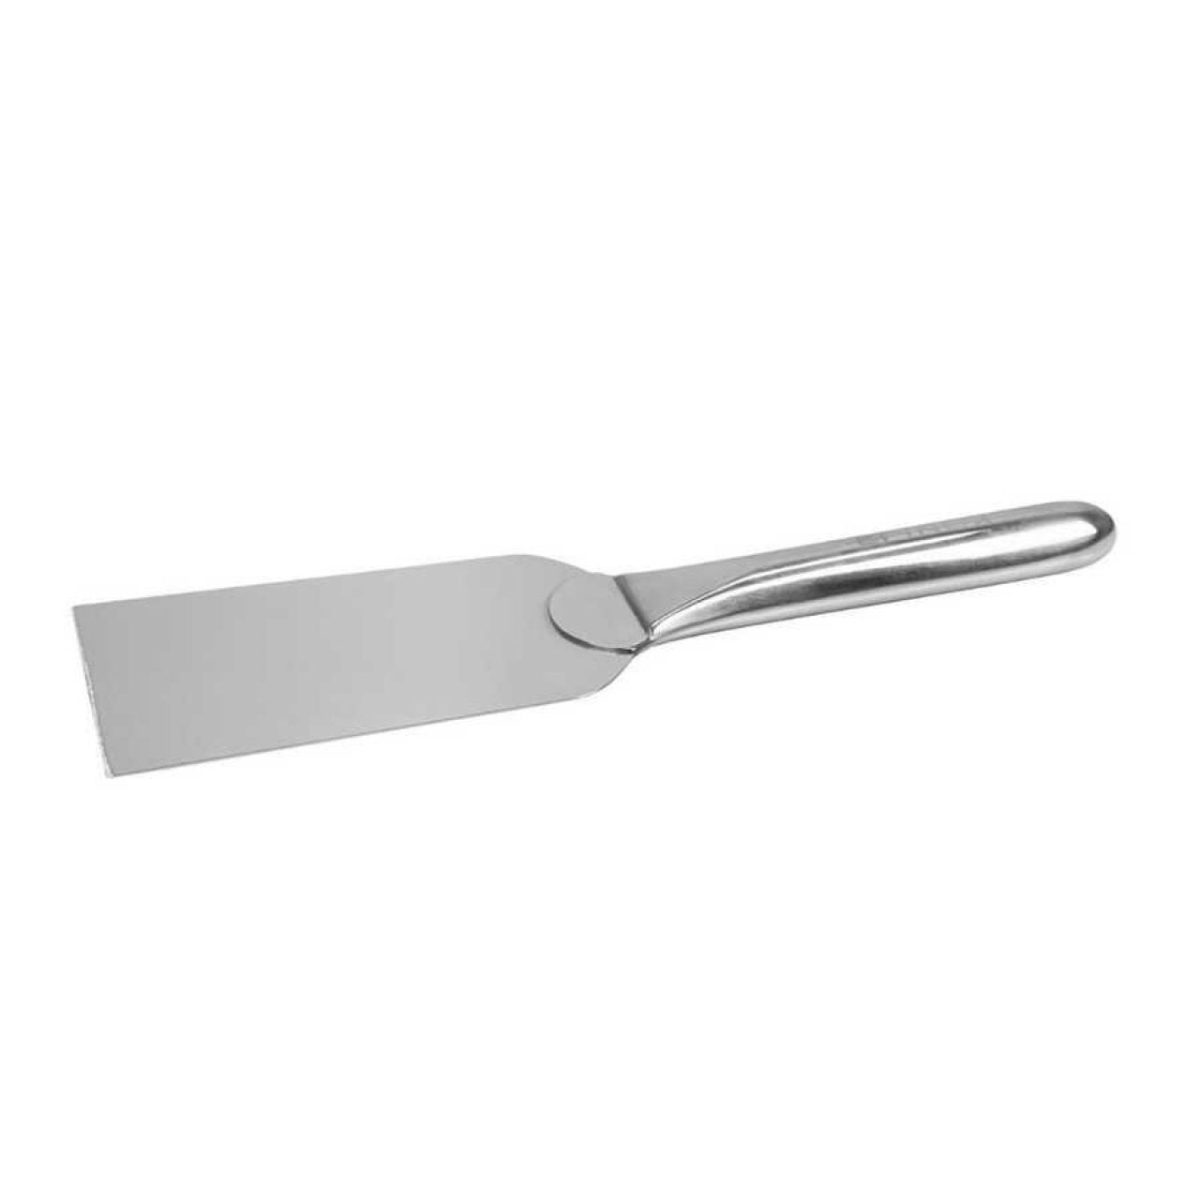 2 celik spatula no 2 ms 1258 resim 4360 1 Spatula Çelik 40 Cm